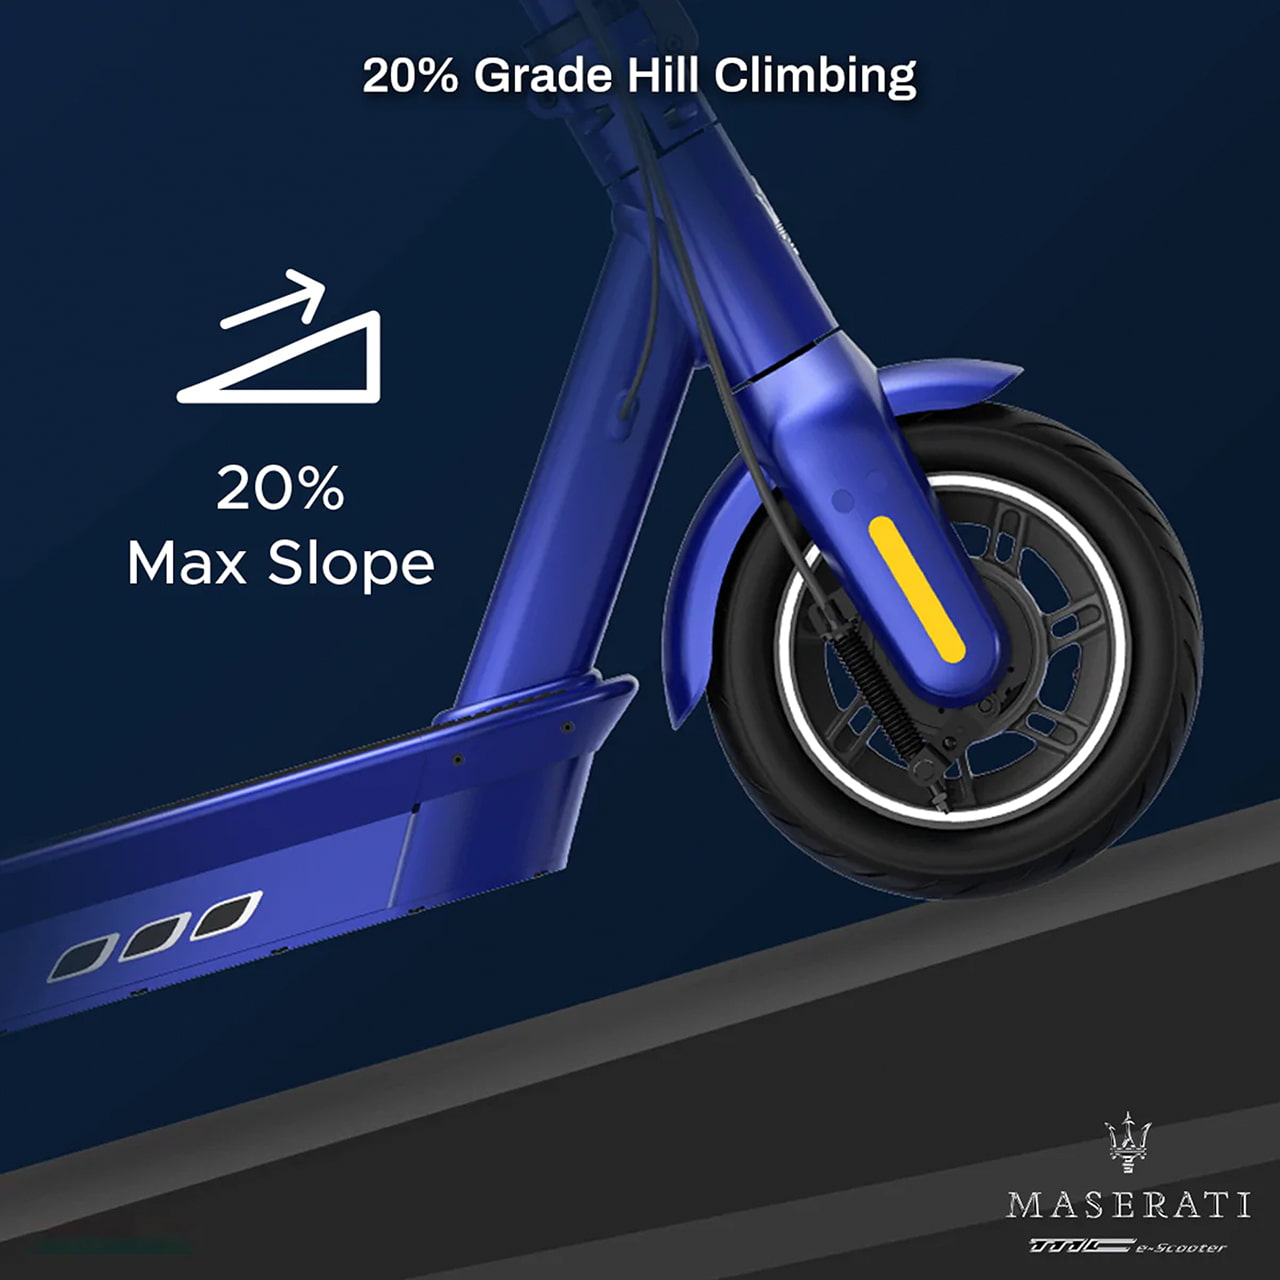 Ninebot KickScooter MAX G30 Maserati преодолевает подъёмы с уклоном до 20%